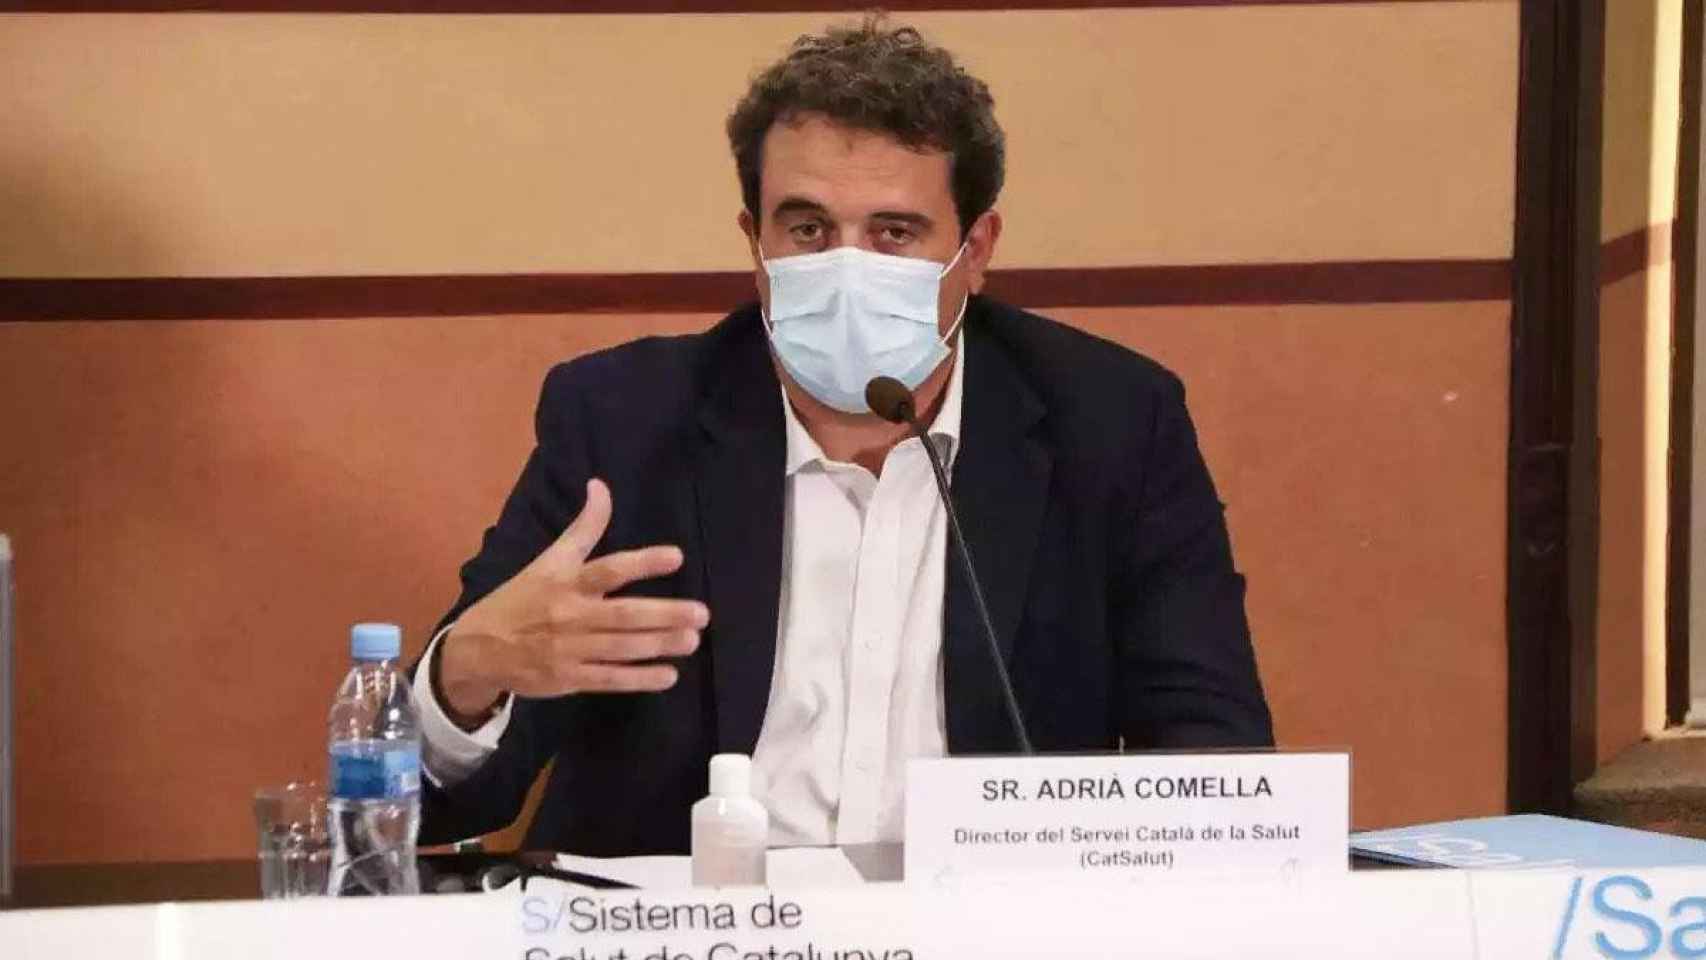 Adrià Comella, director del CatSalut, en una comparecencia anterior / CG